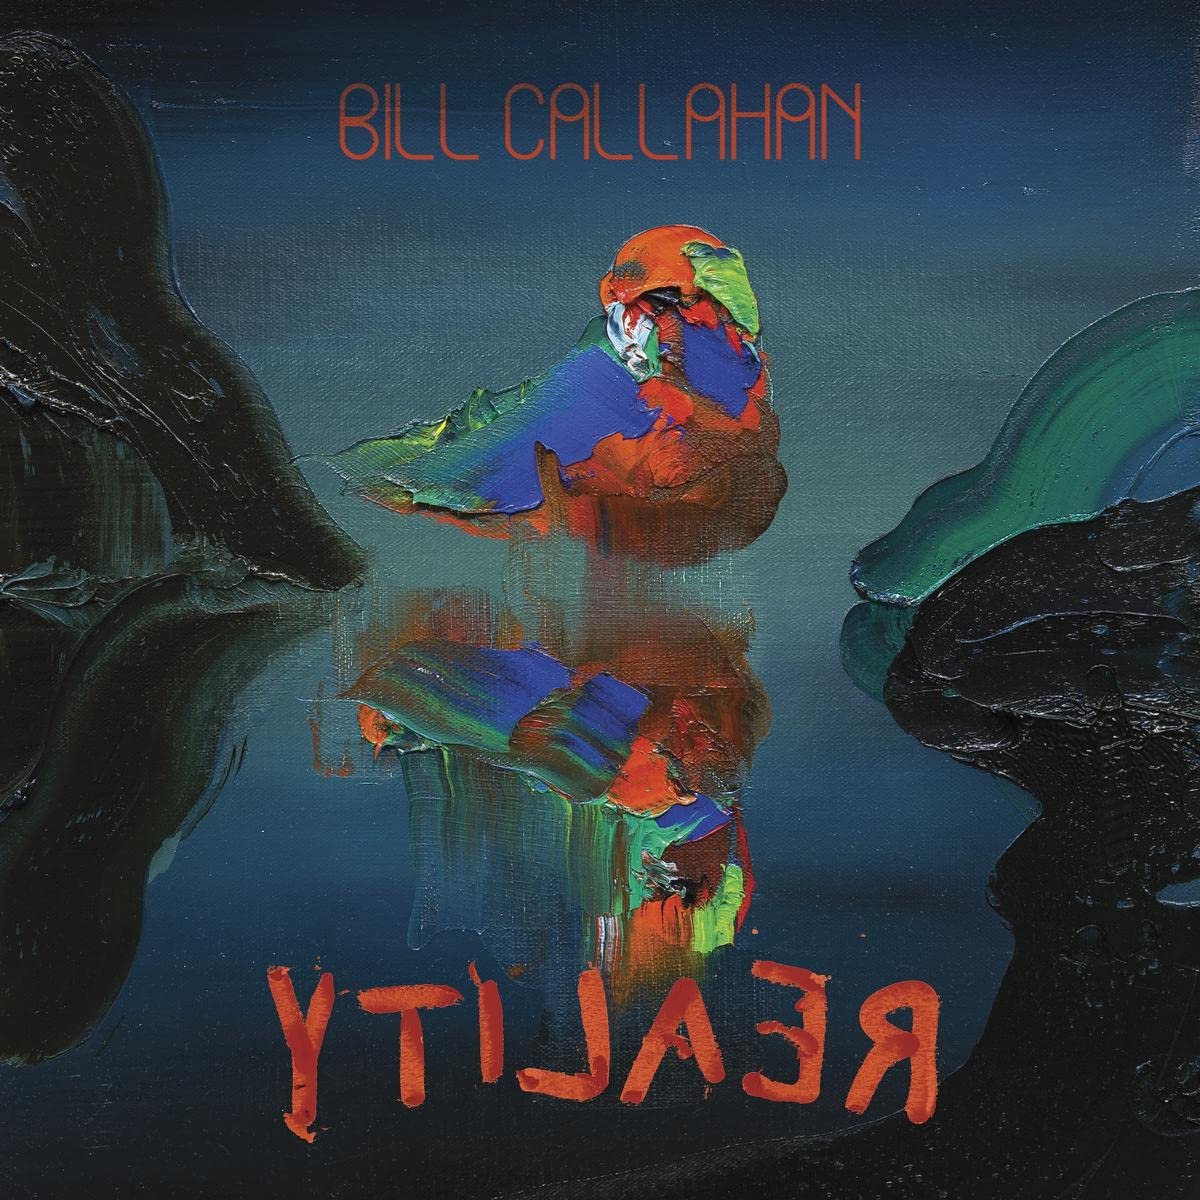 Bill Callahan - TYILAER